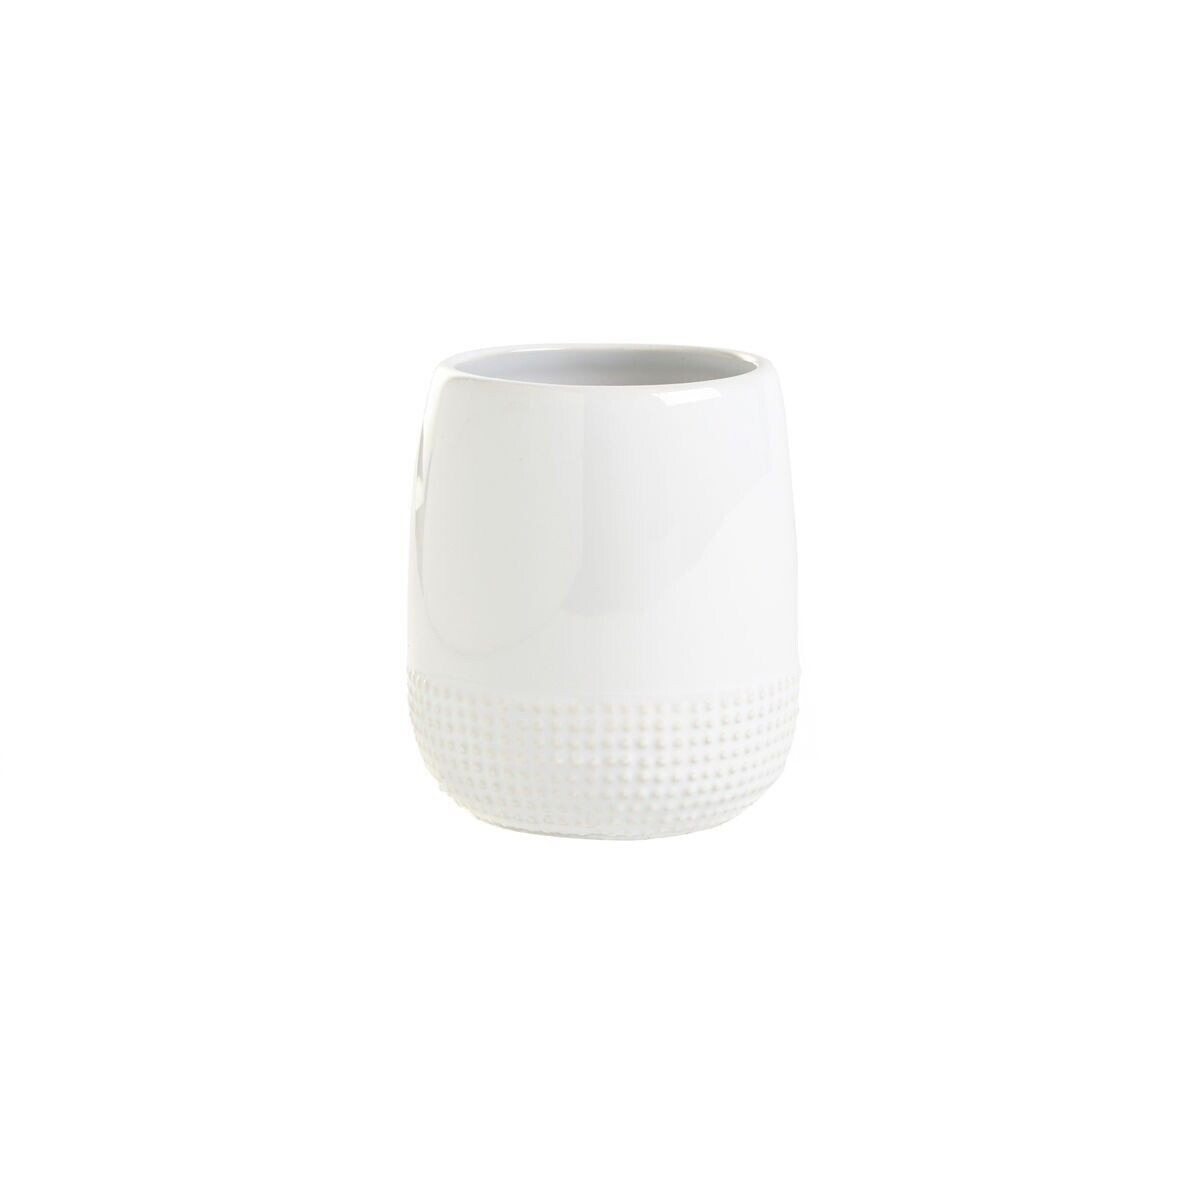 Dots ceramic toothbrush holder, White, large image number 0